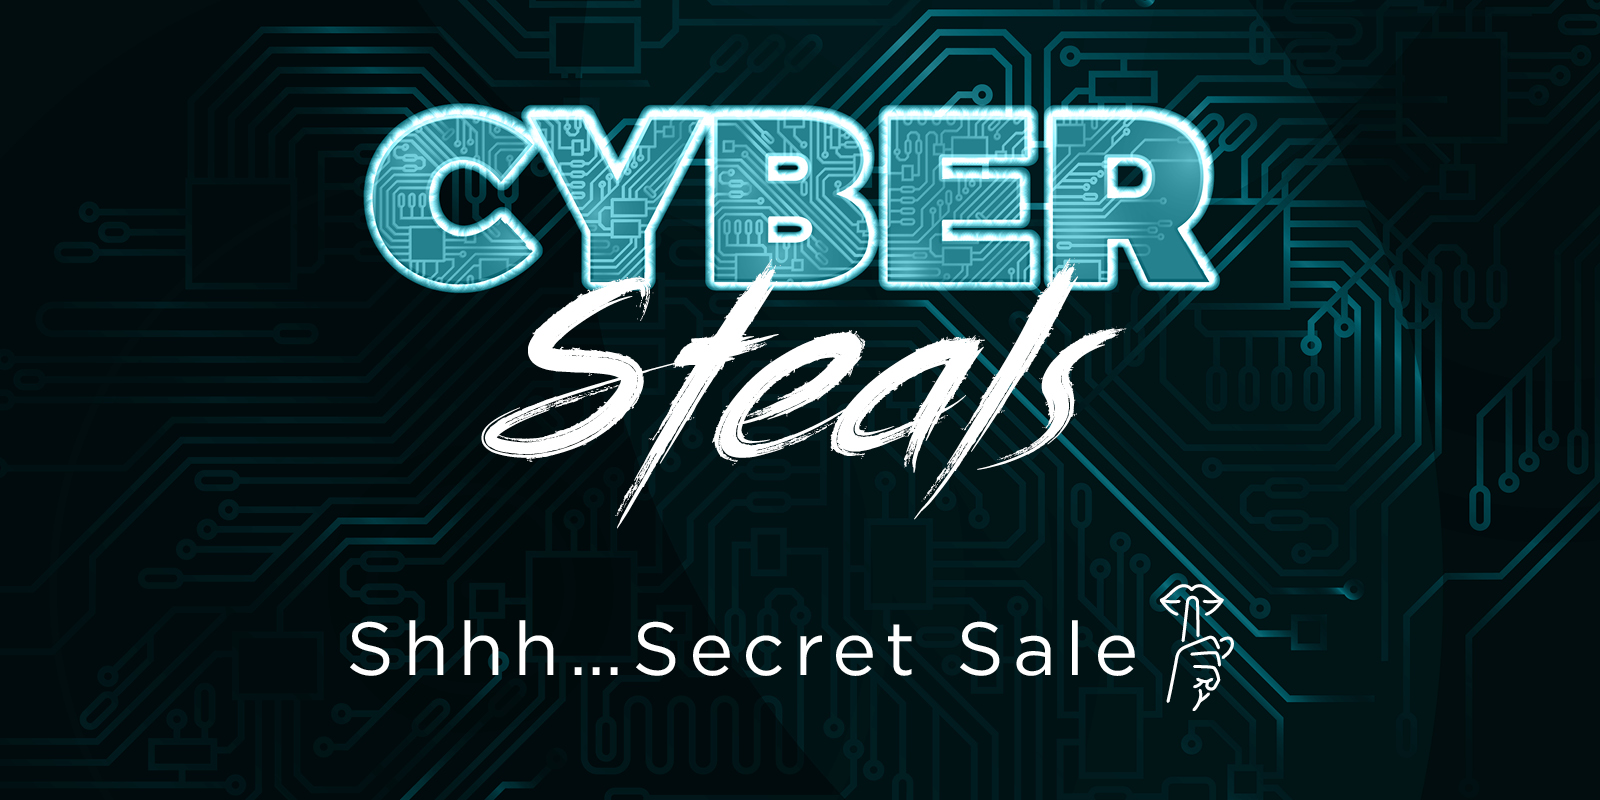 Cyber Steals - Shhh...Secret Sale